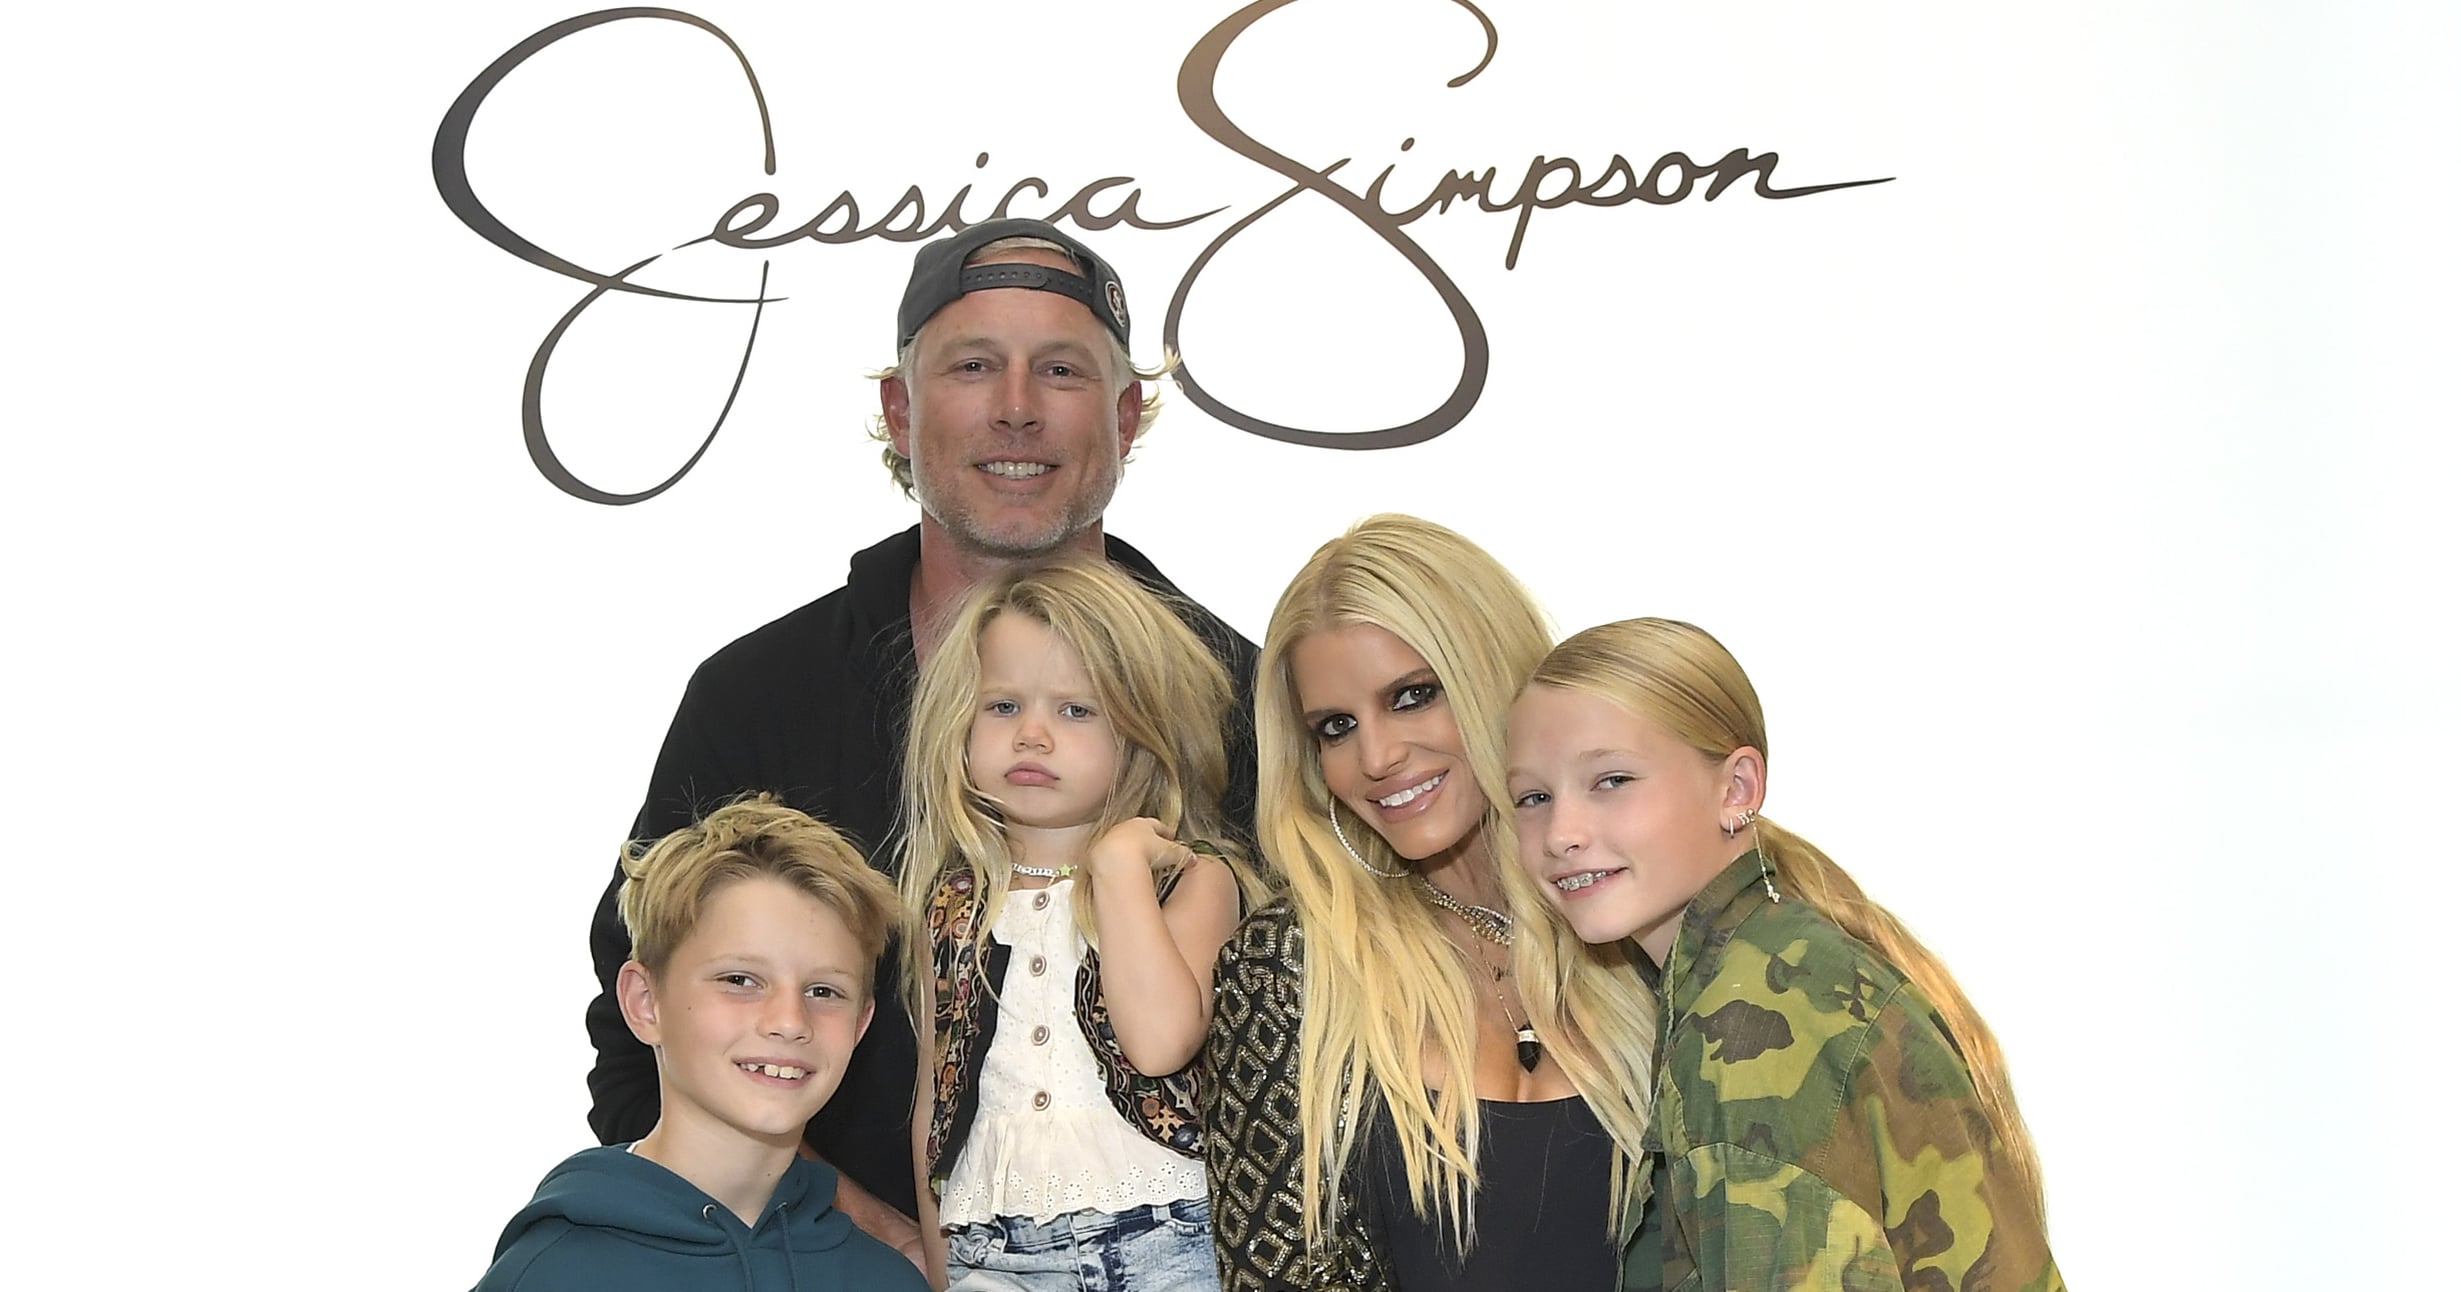 Who Are Jessica Simpson's Kids? - Jessica Simpson's Family Members